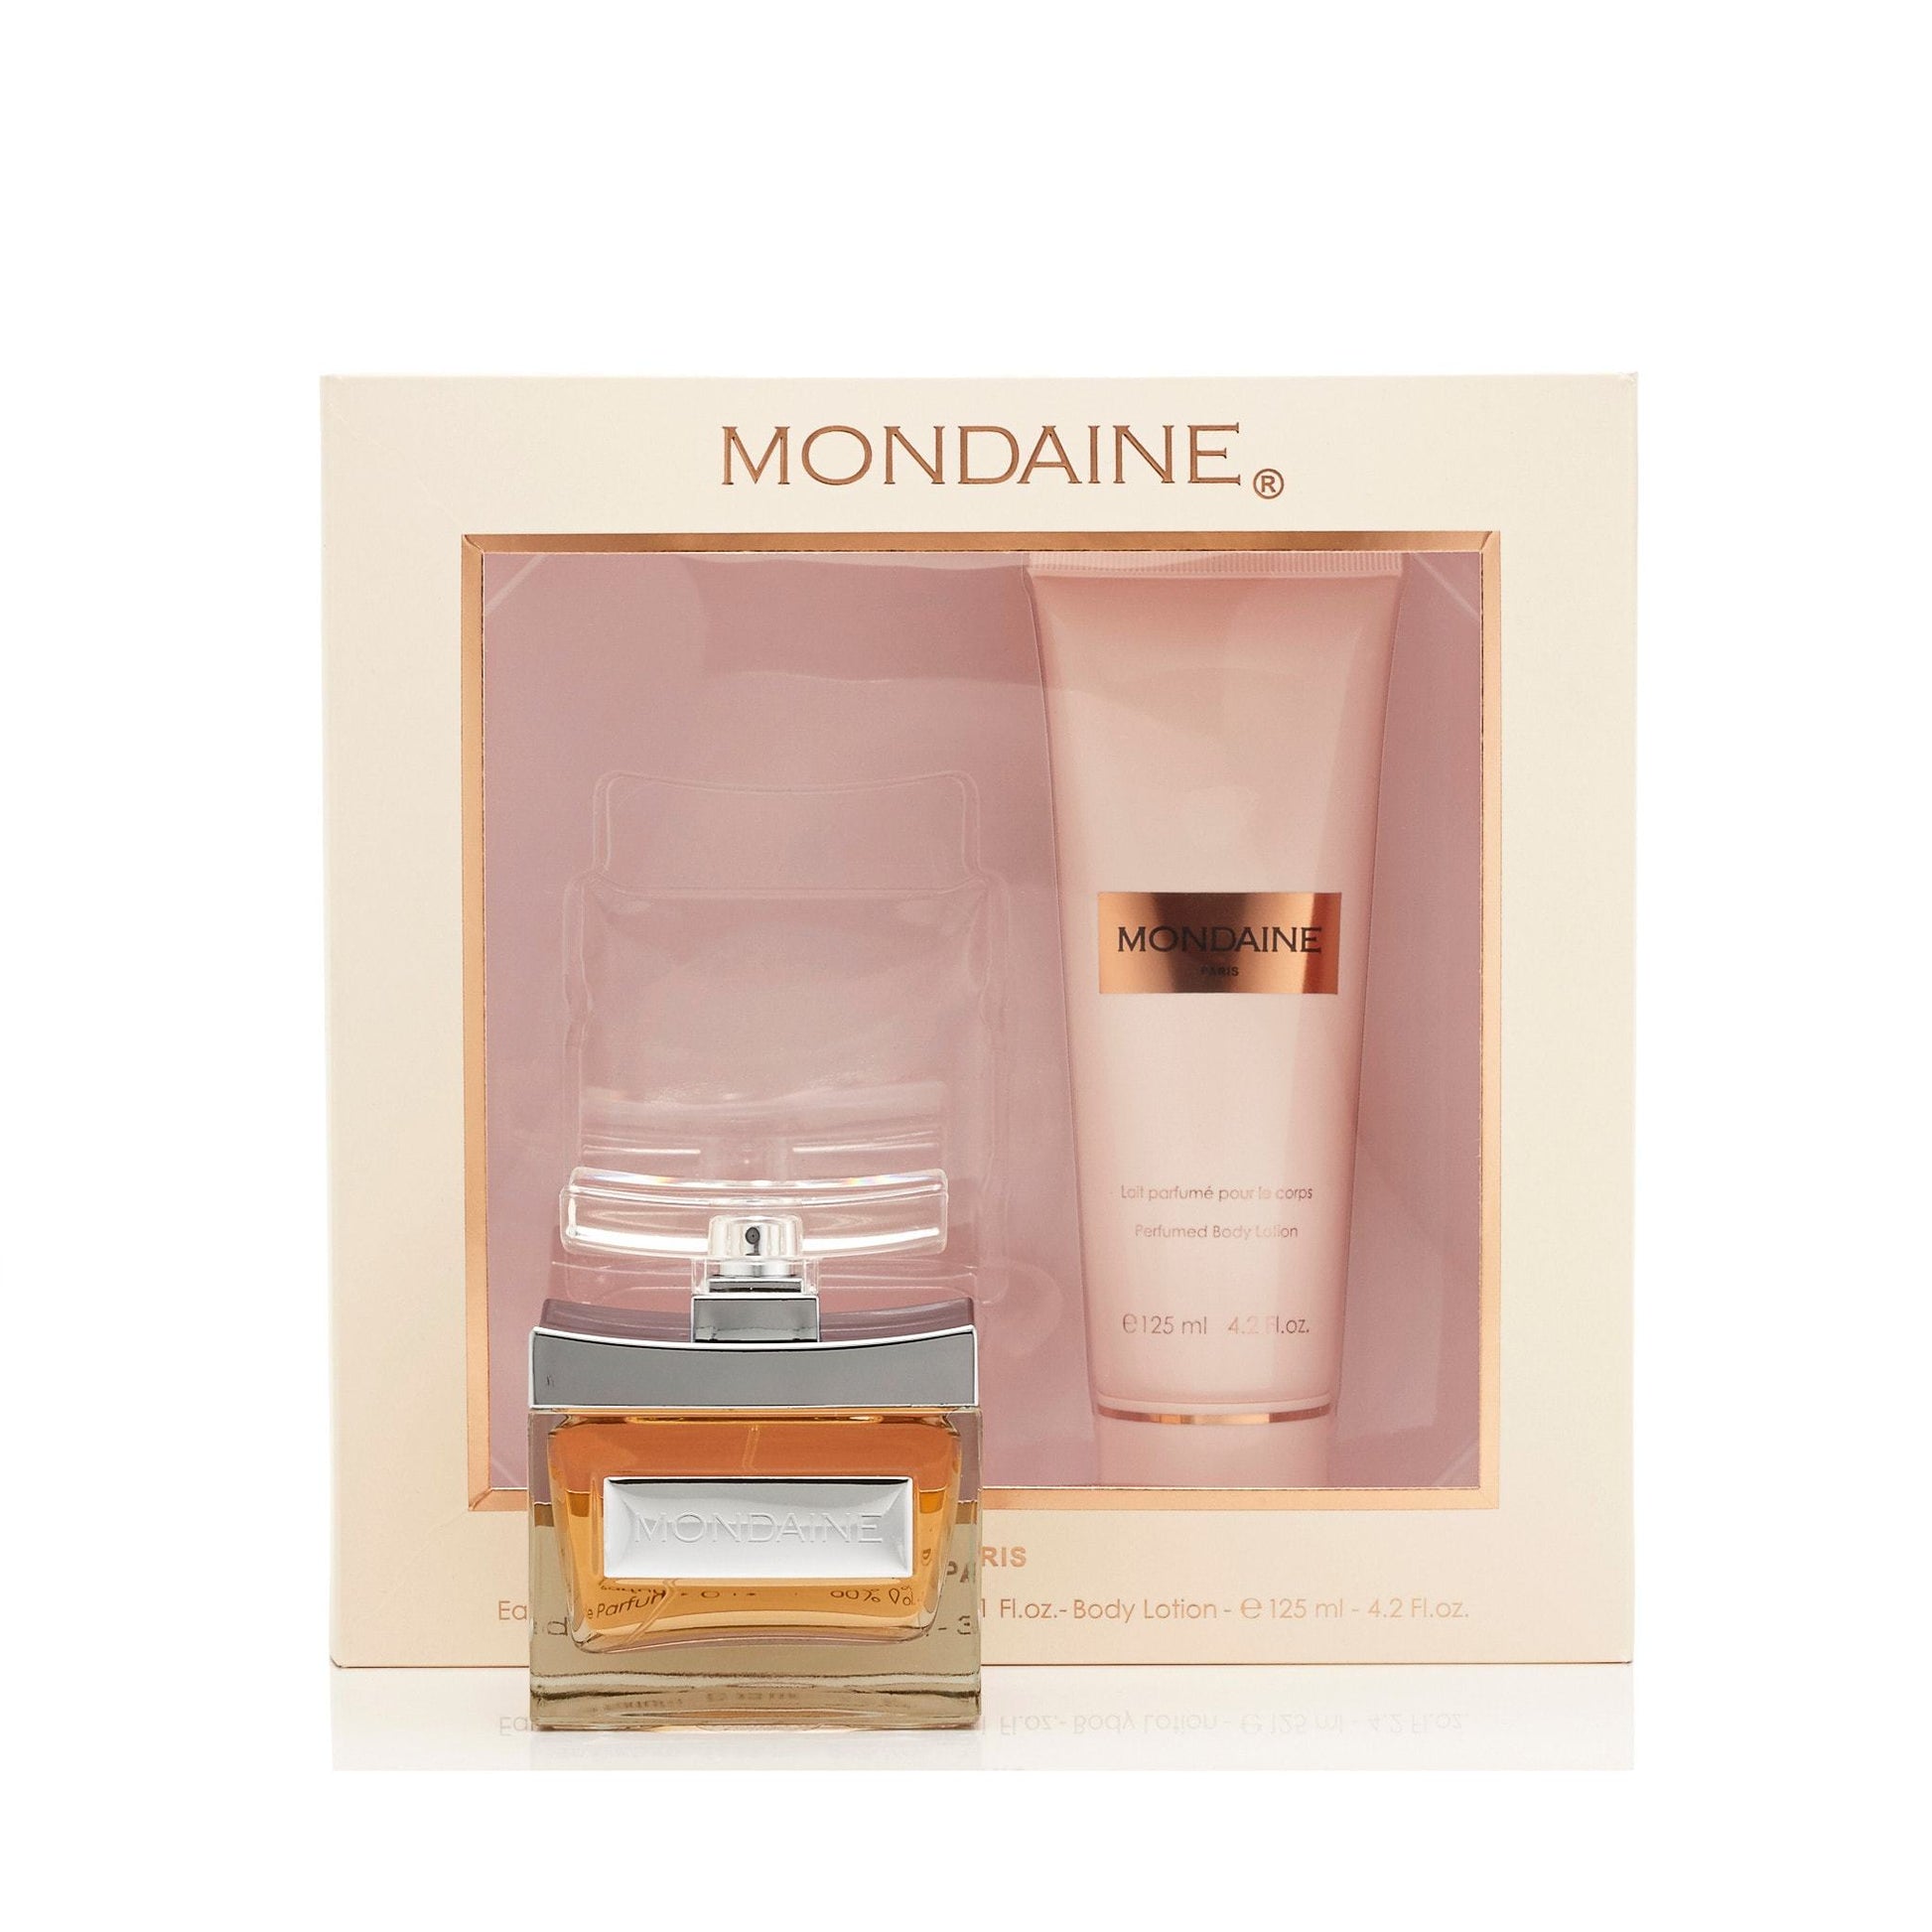 Mondaine Gift Set for Women, Product image 1